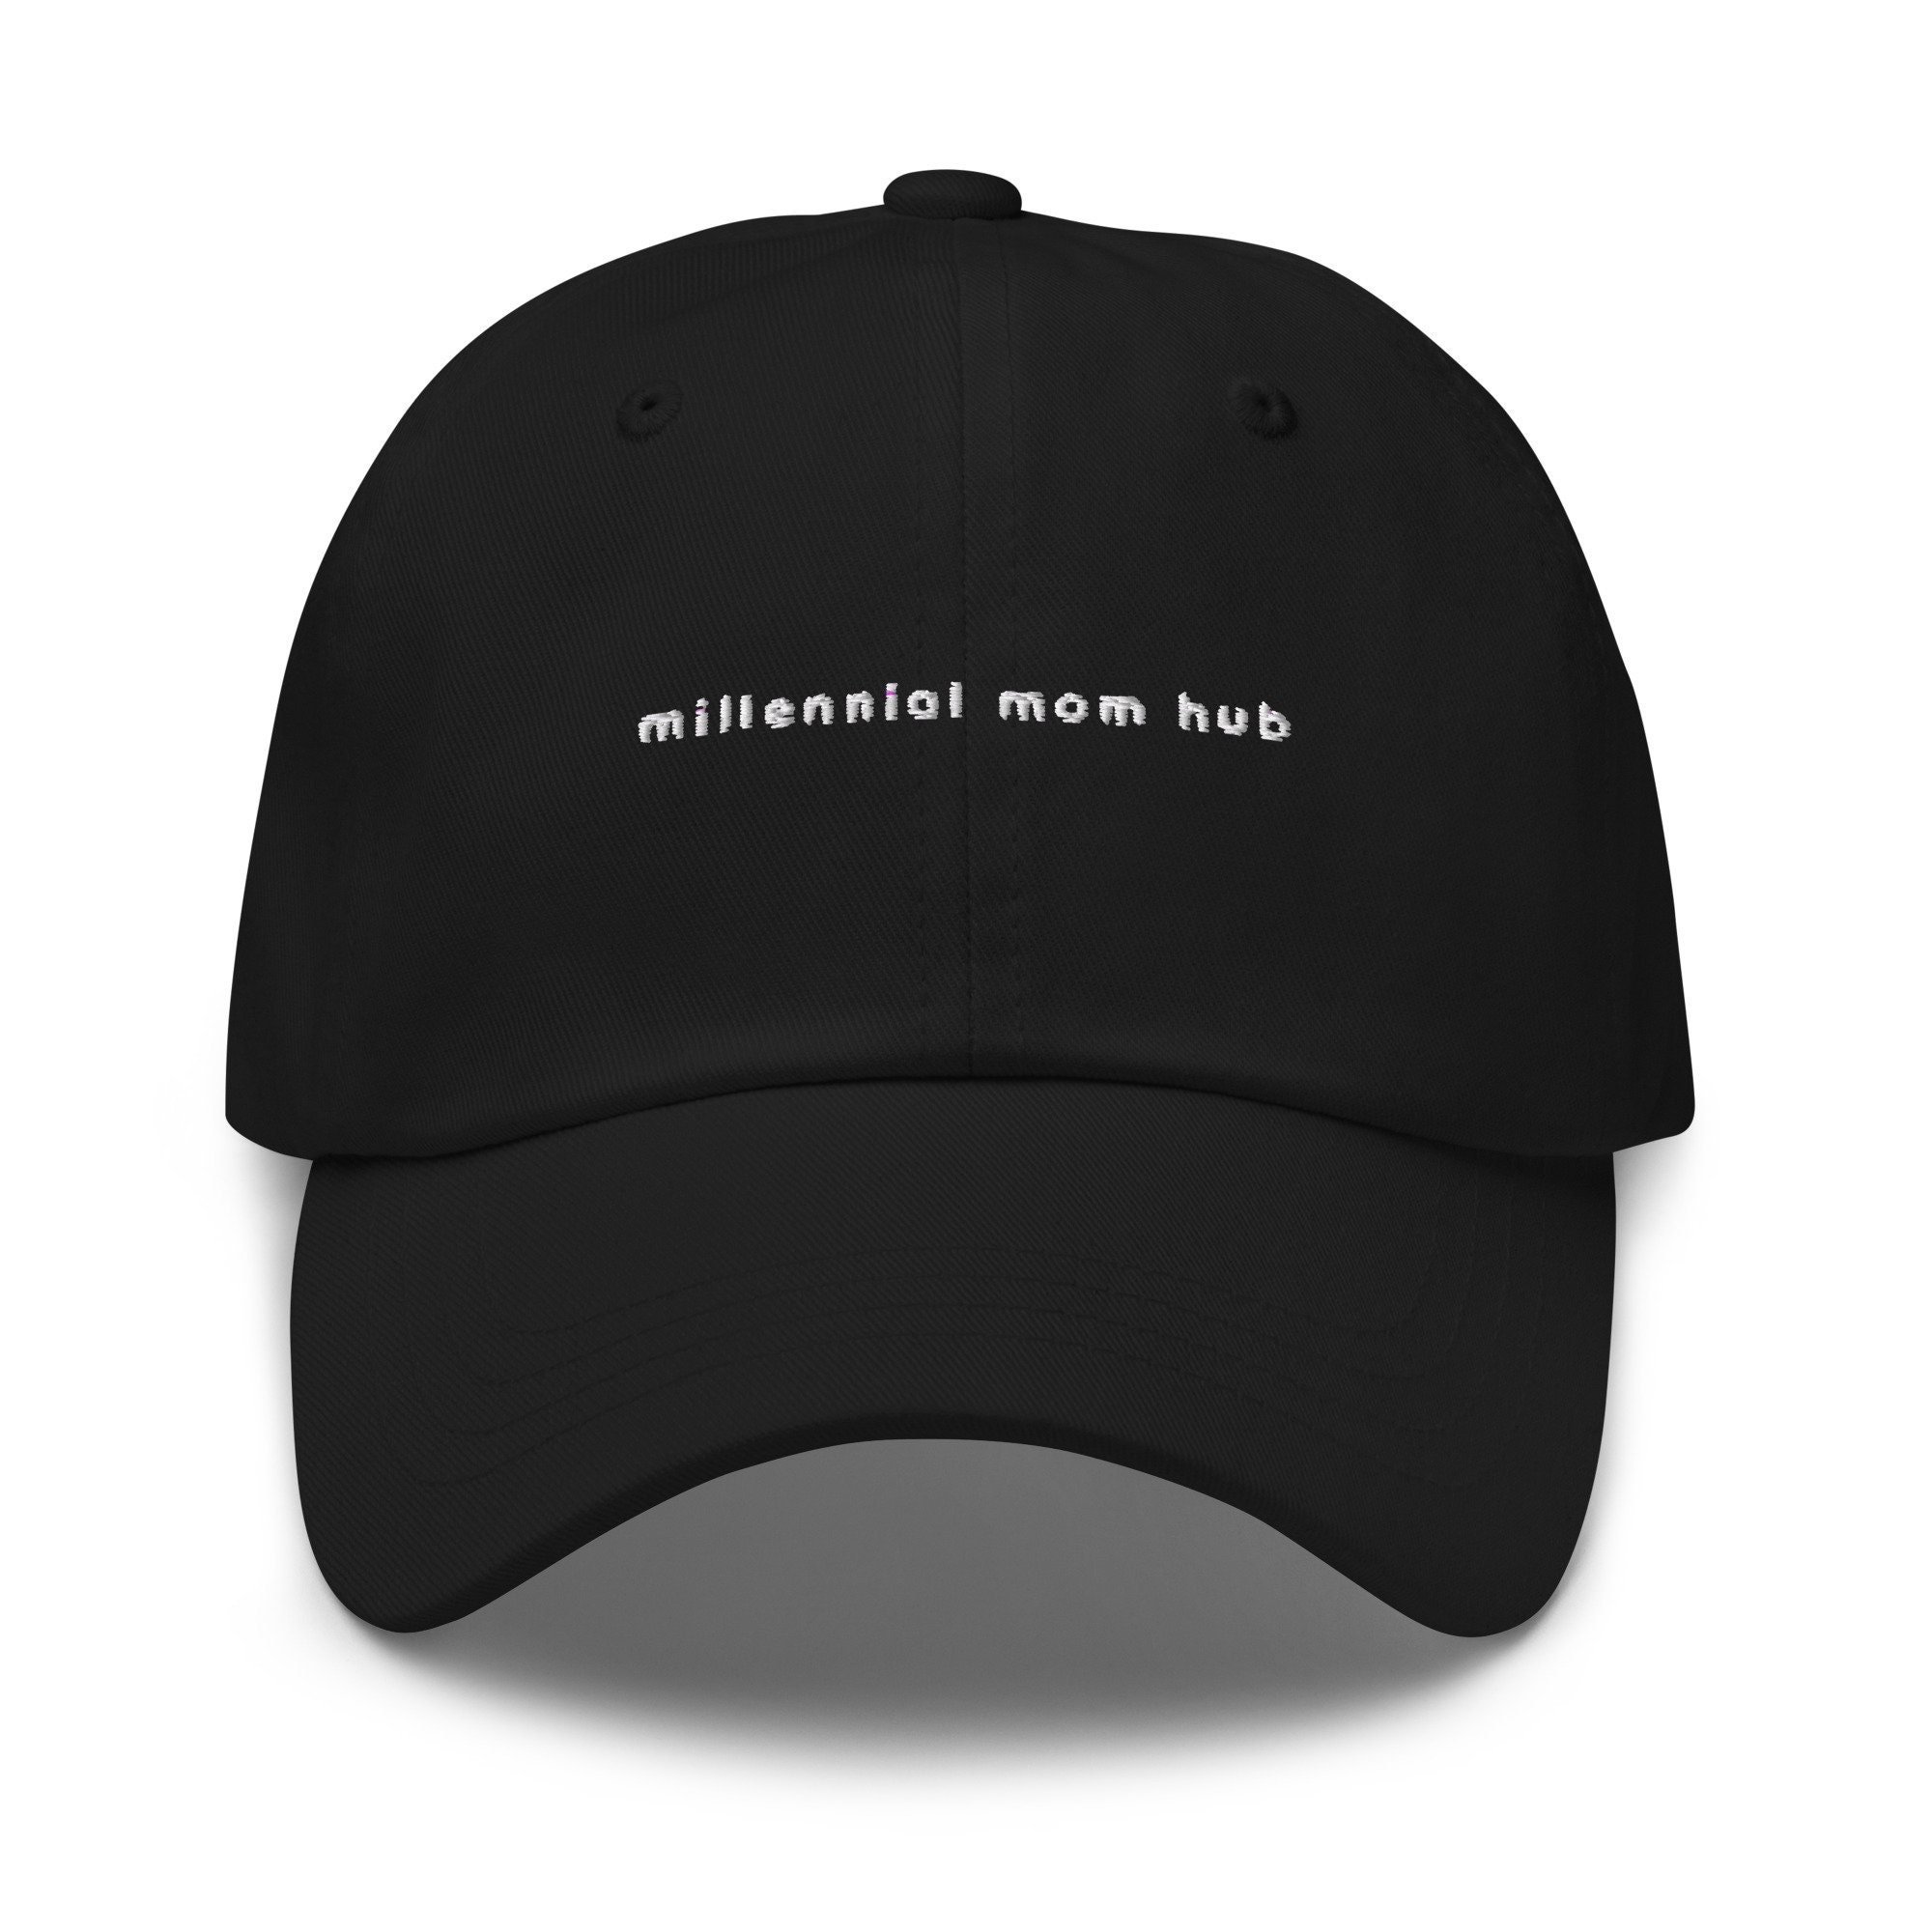 Hat Brim Bender, Hat Curving Band, Convenient Hat Shaper Design